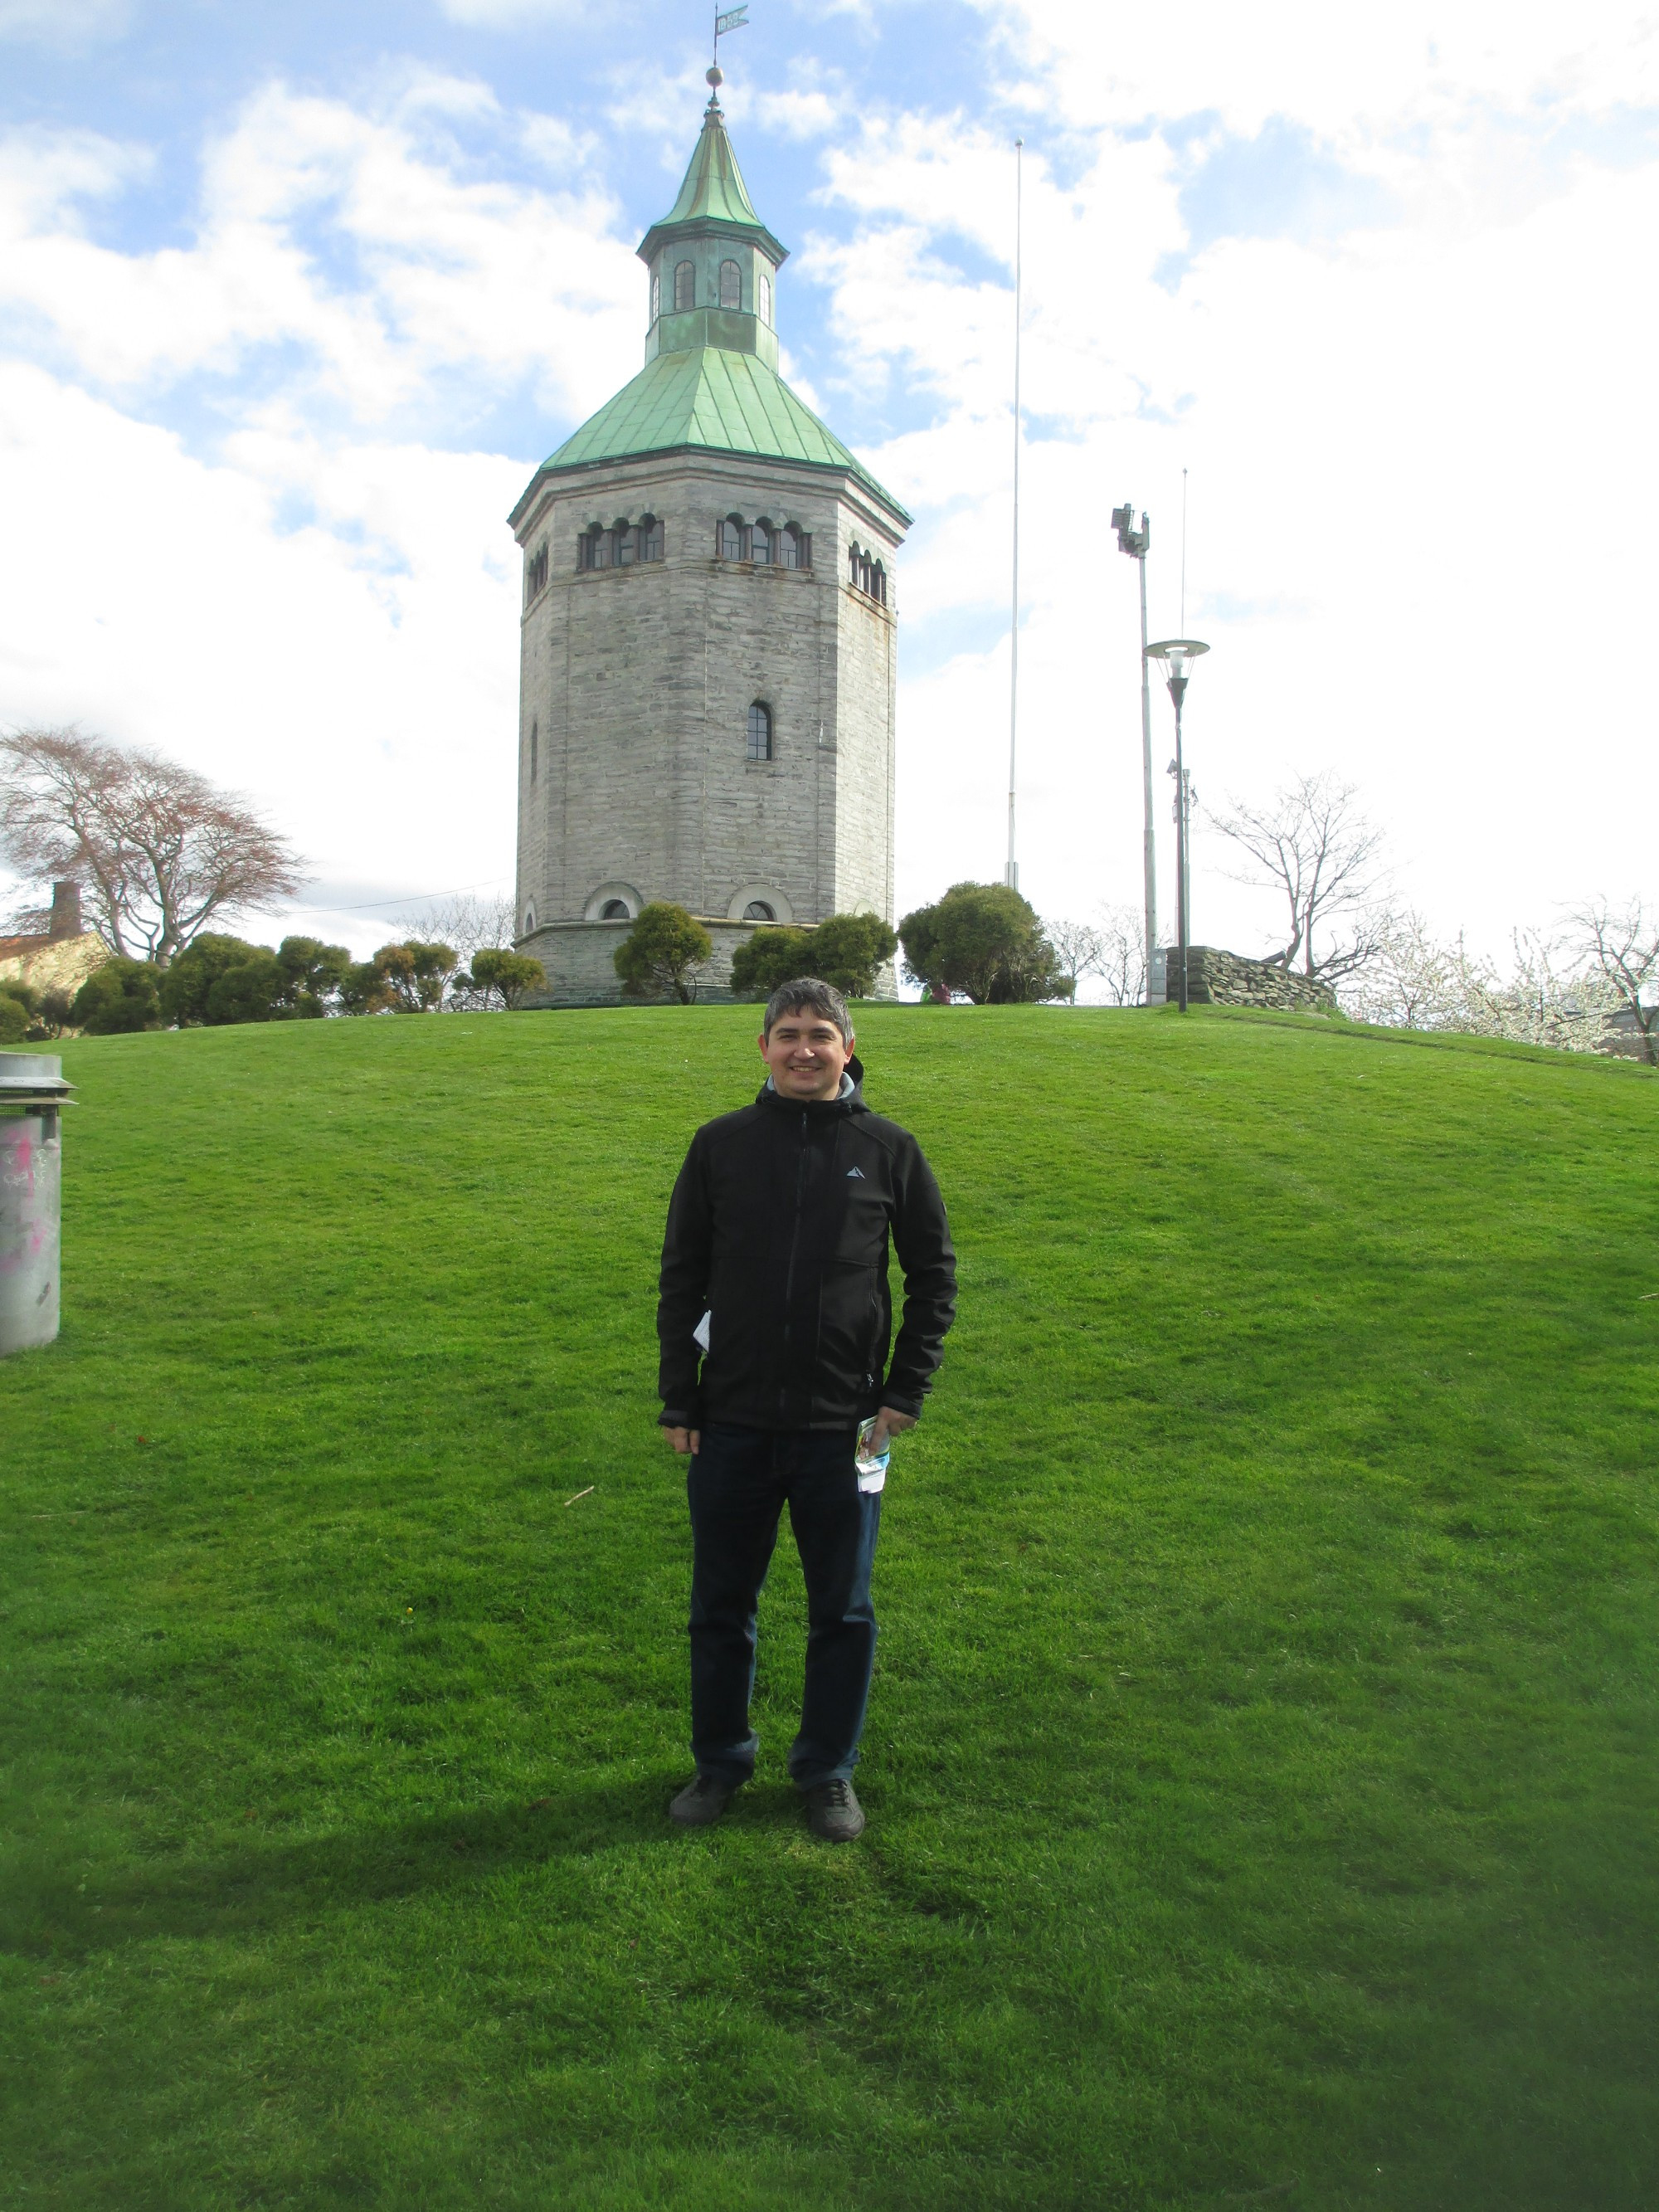 Ставангер. Я на фоне башни Вальберг. (05.05.2015)